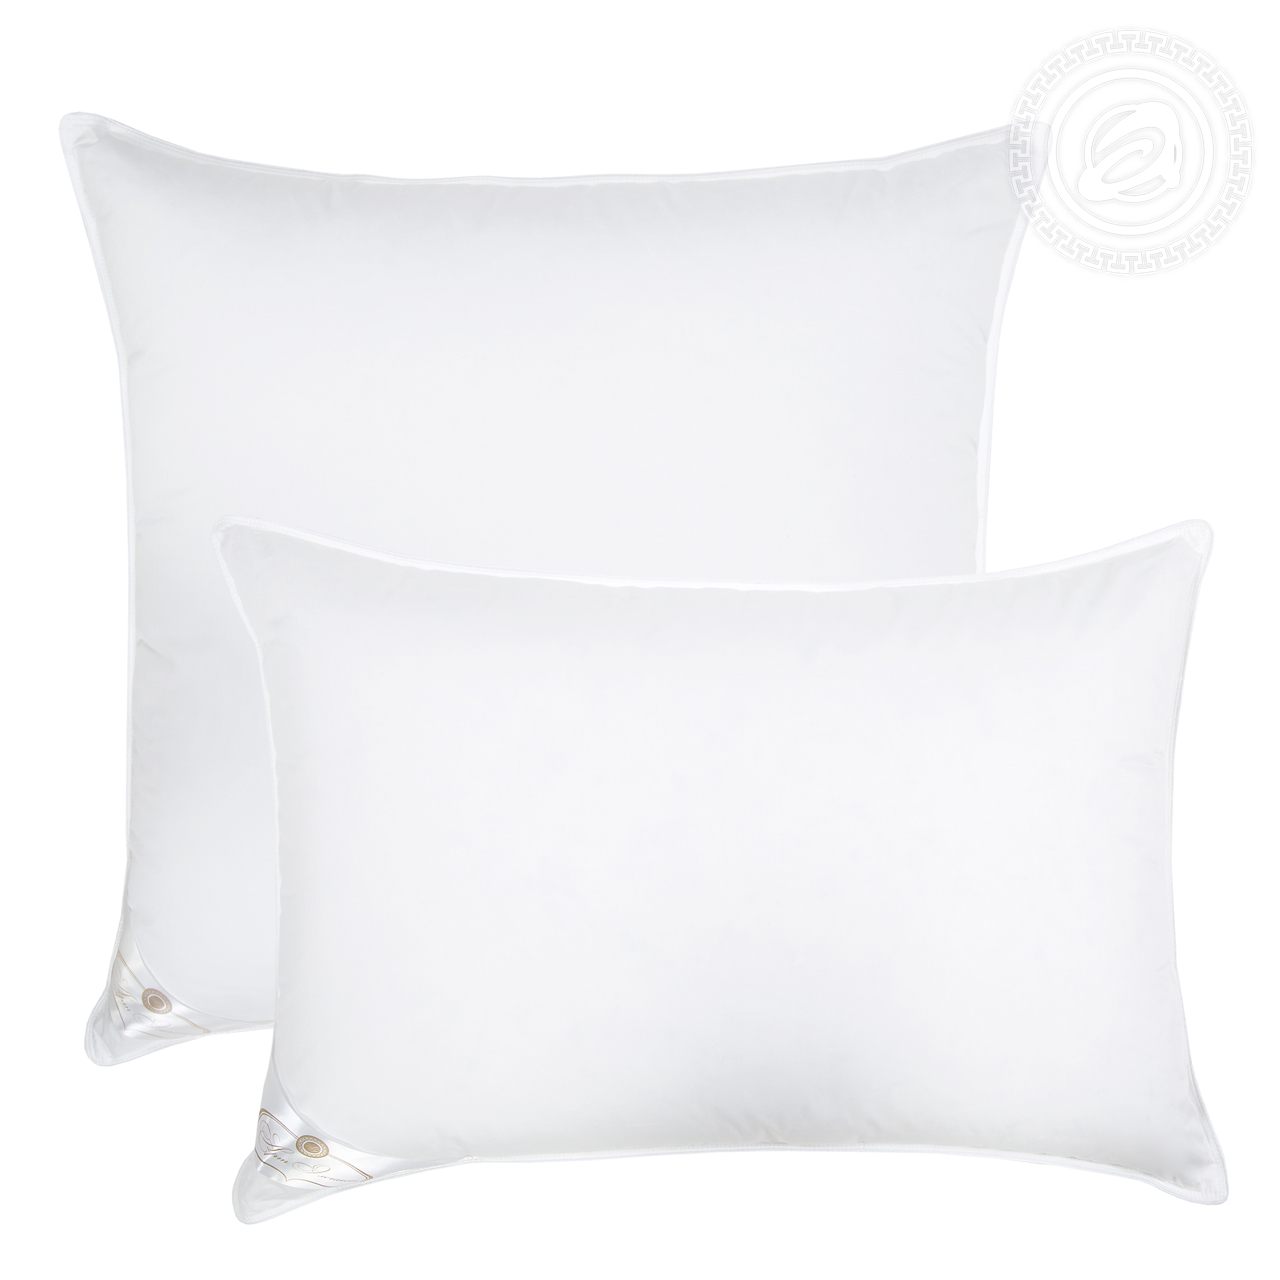 

Подушка для сна Арт Элегант aet417375 пух-перо 68x68 см, Белый